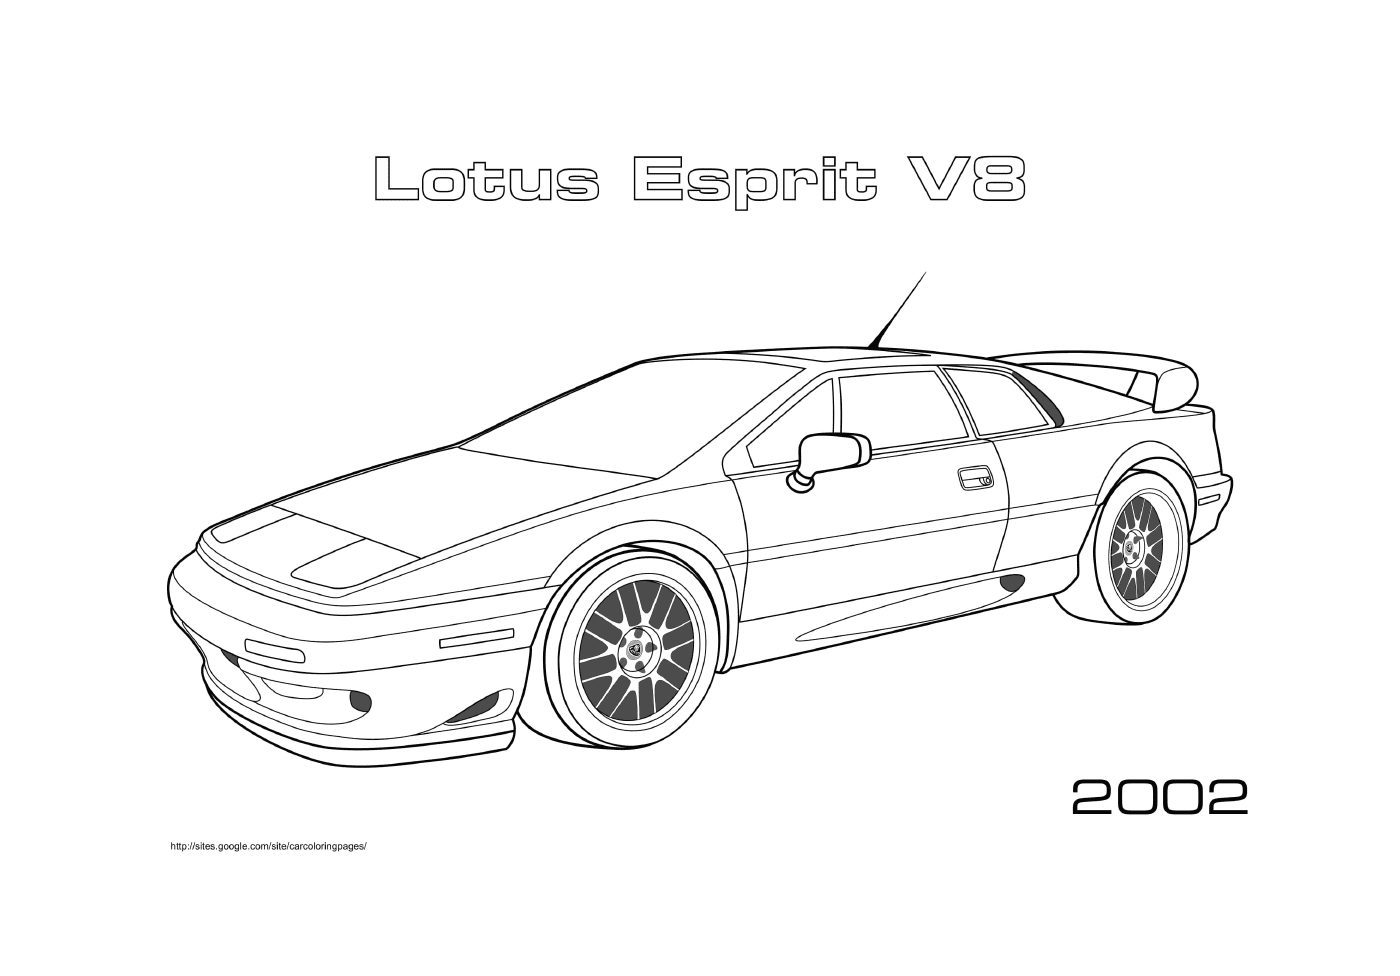  Lotus Esprit V8 de 2002 